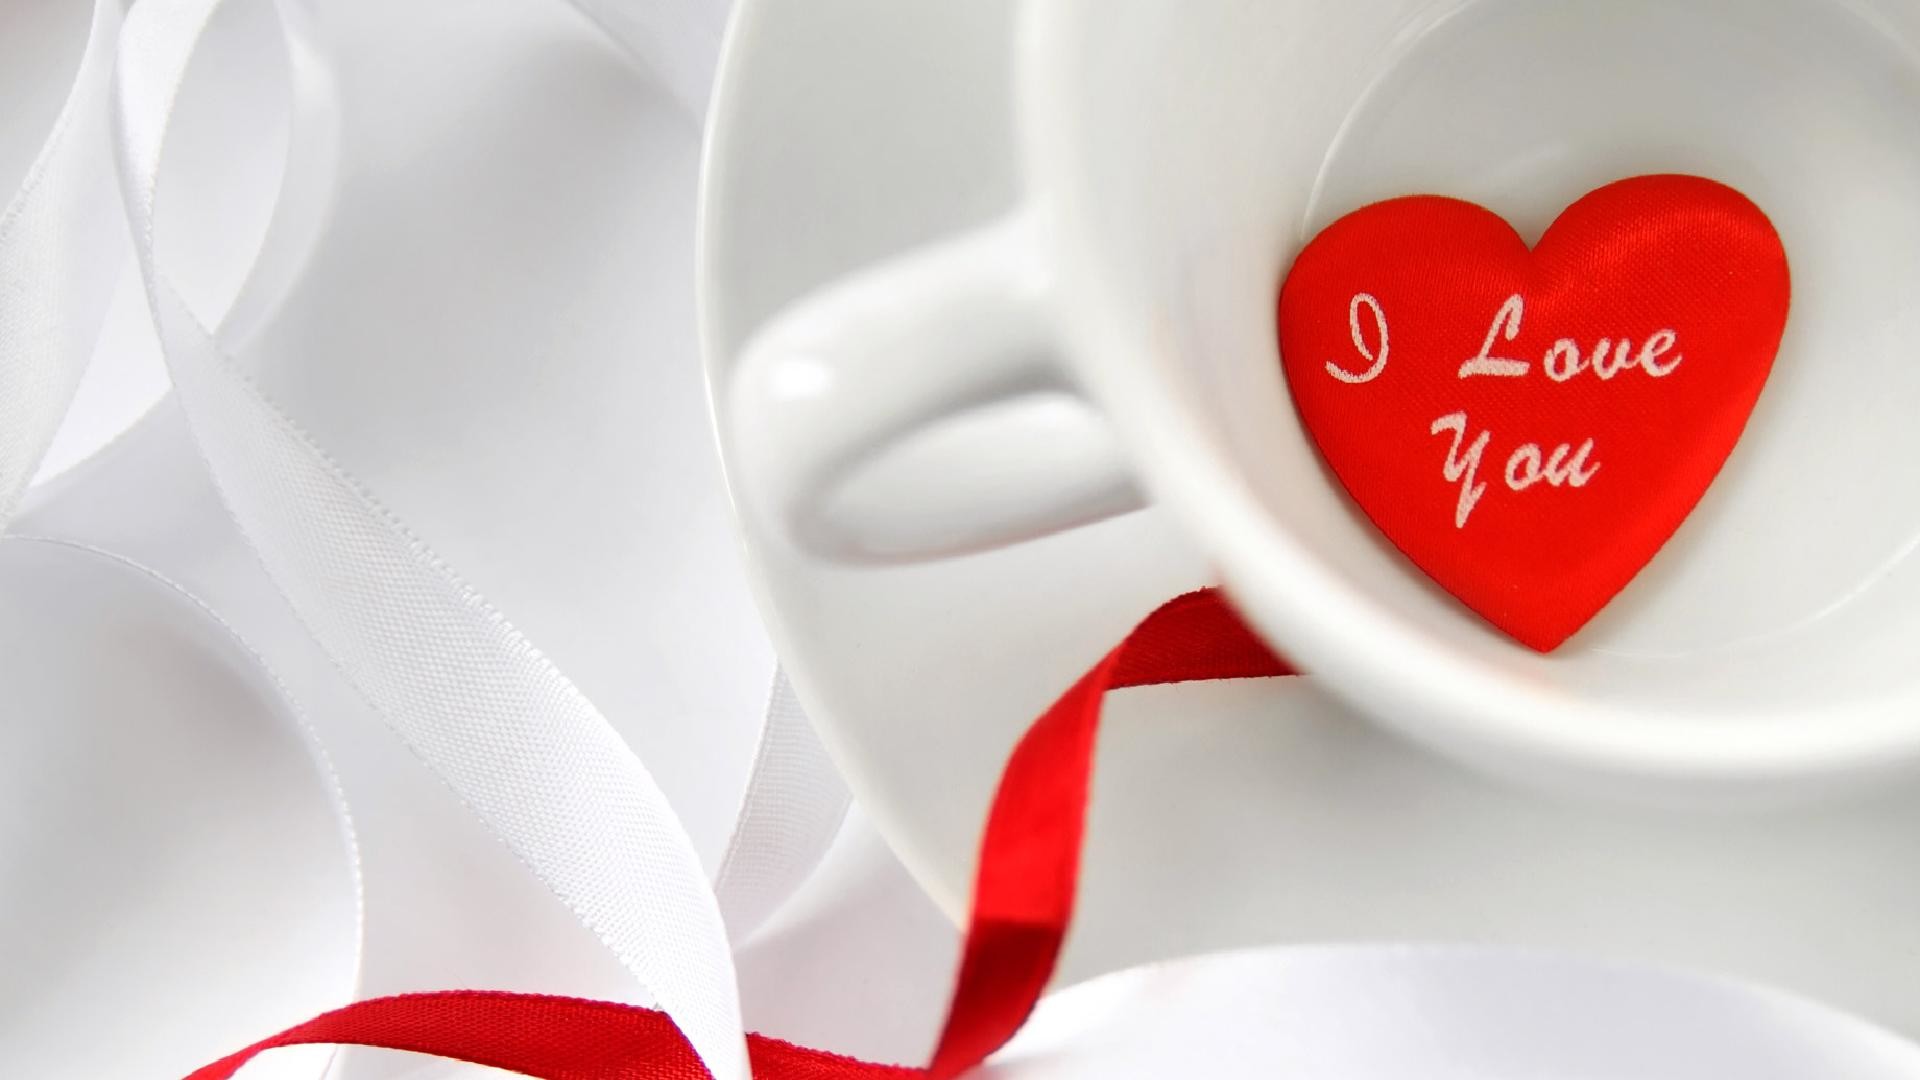 I Love You Red Heart In A White Mug 1920x1080